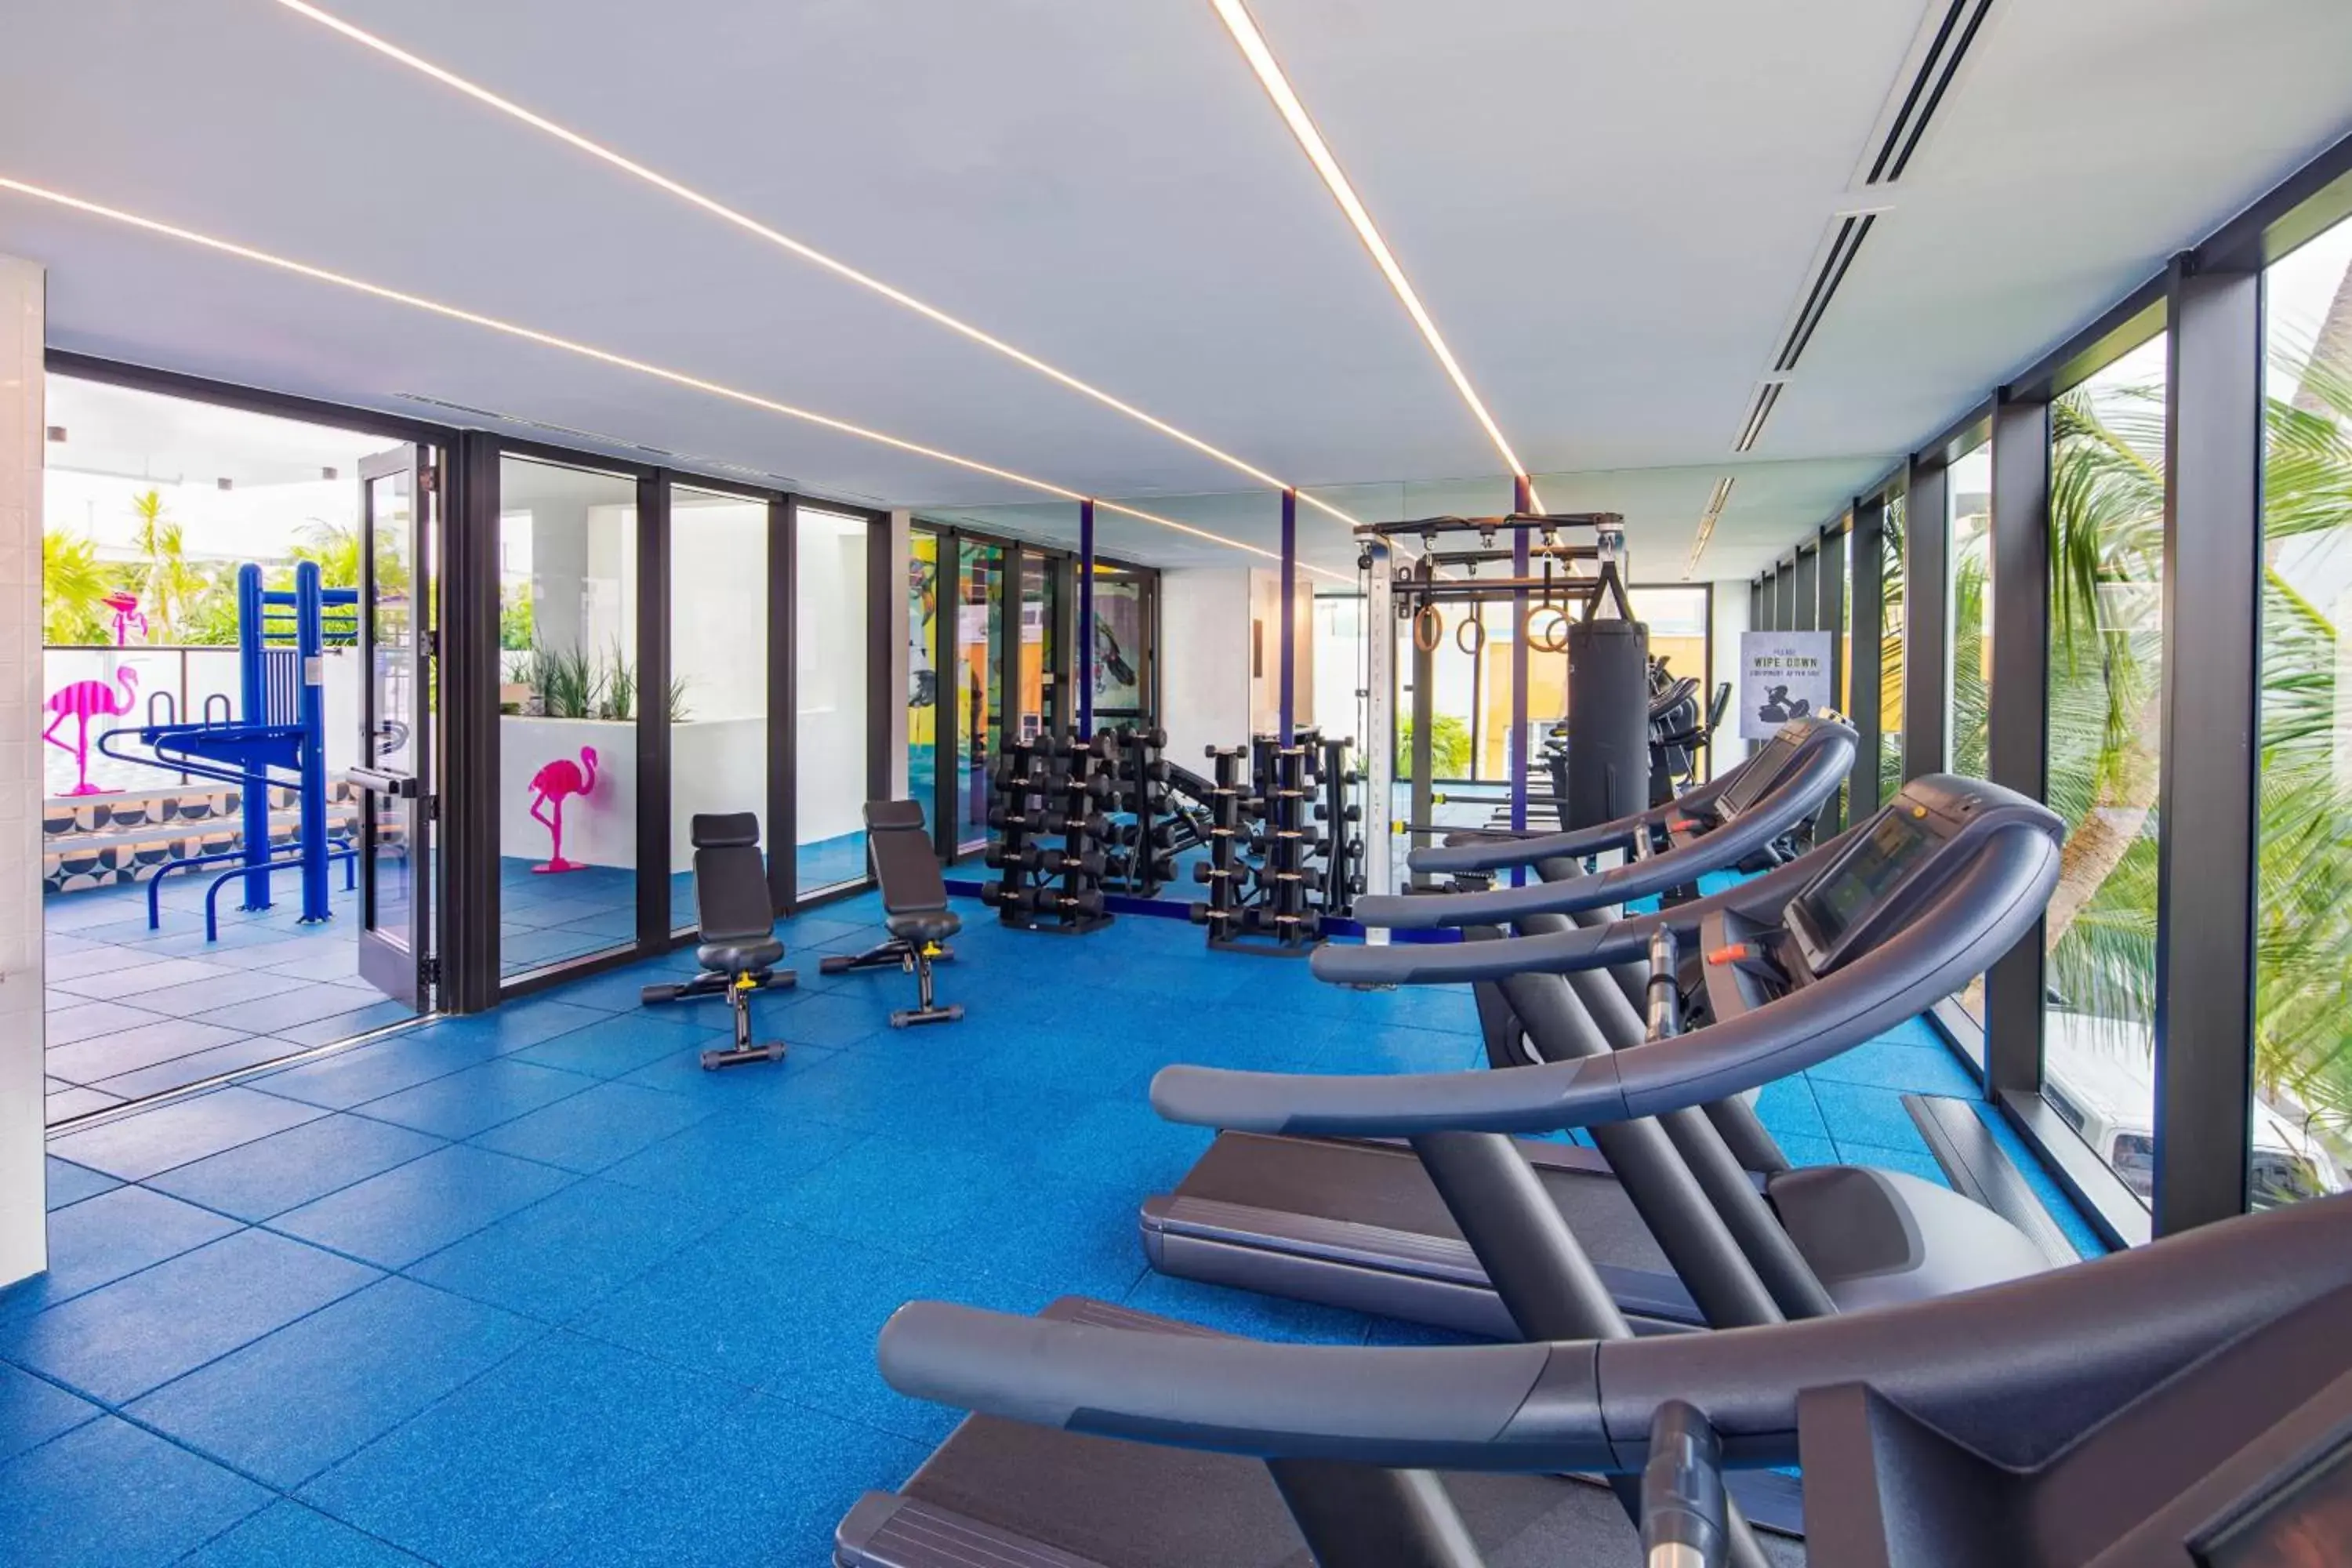 Fitness centre/facilities, Fitness Center/Facilities in Moxy Miami South Beach